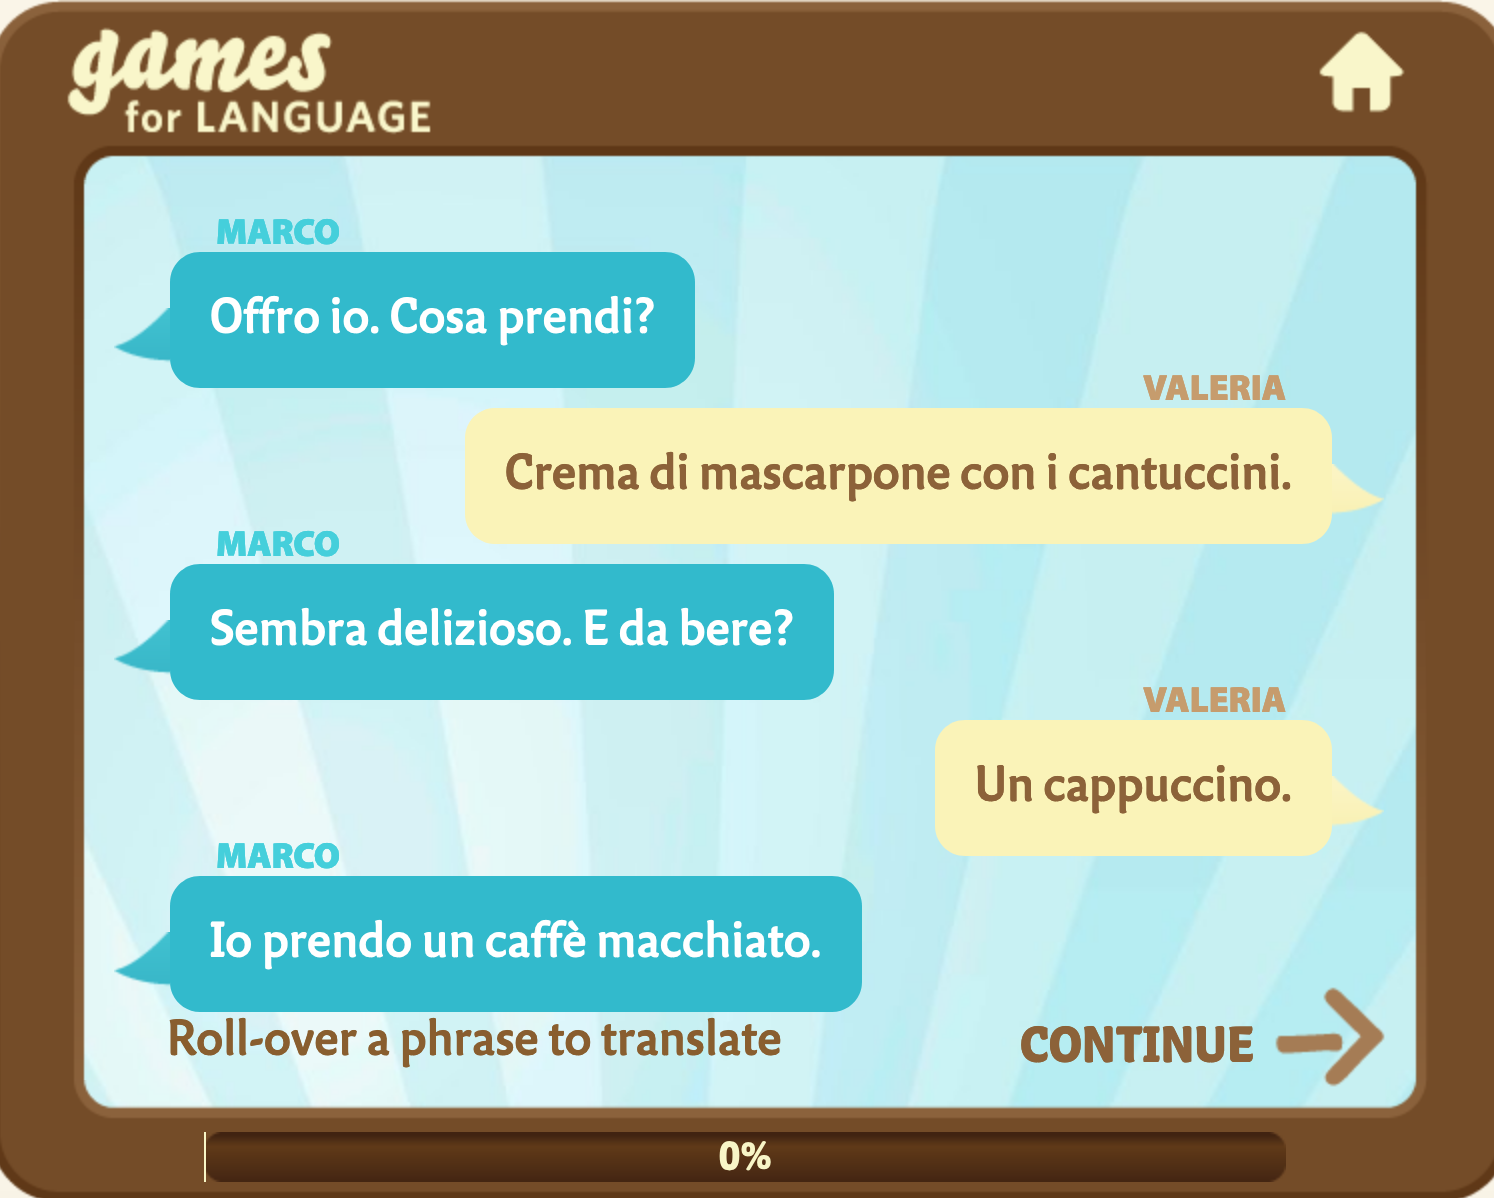 Gamesforlanguage.com: In an Italian café